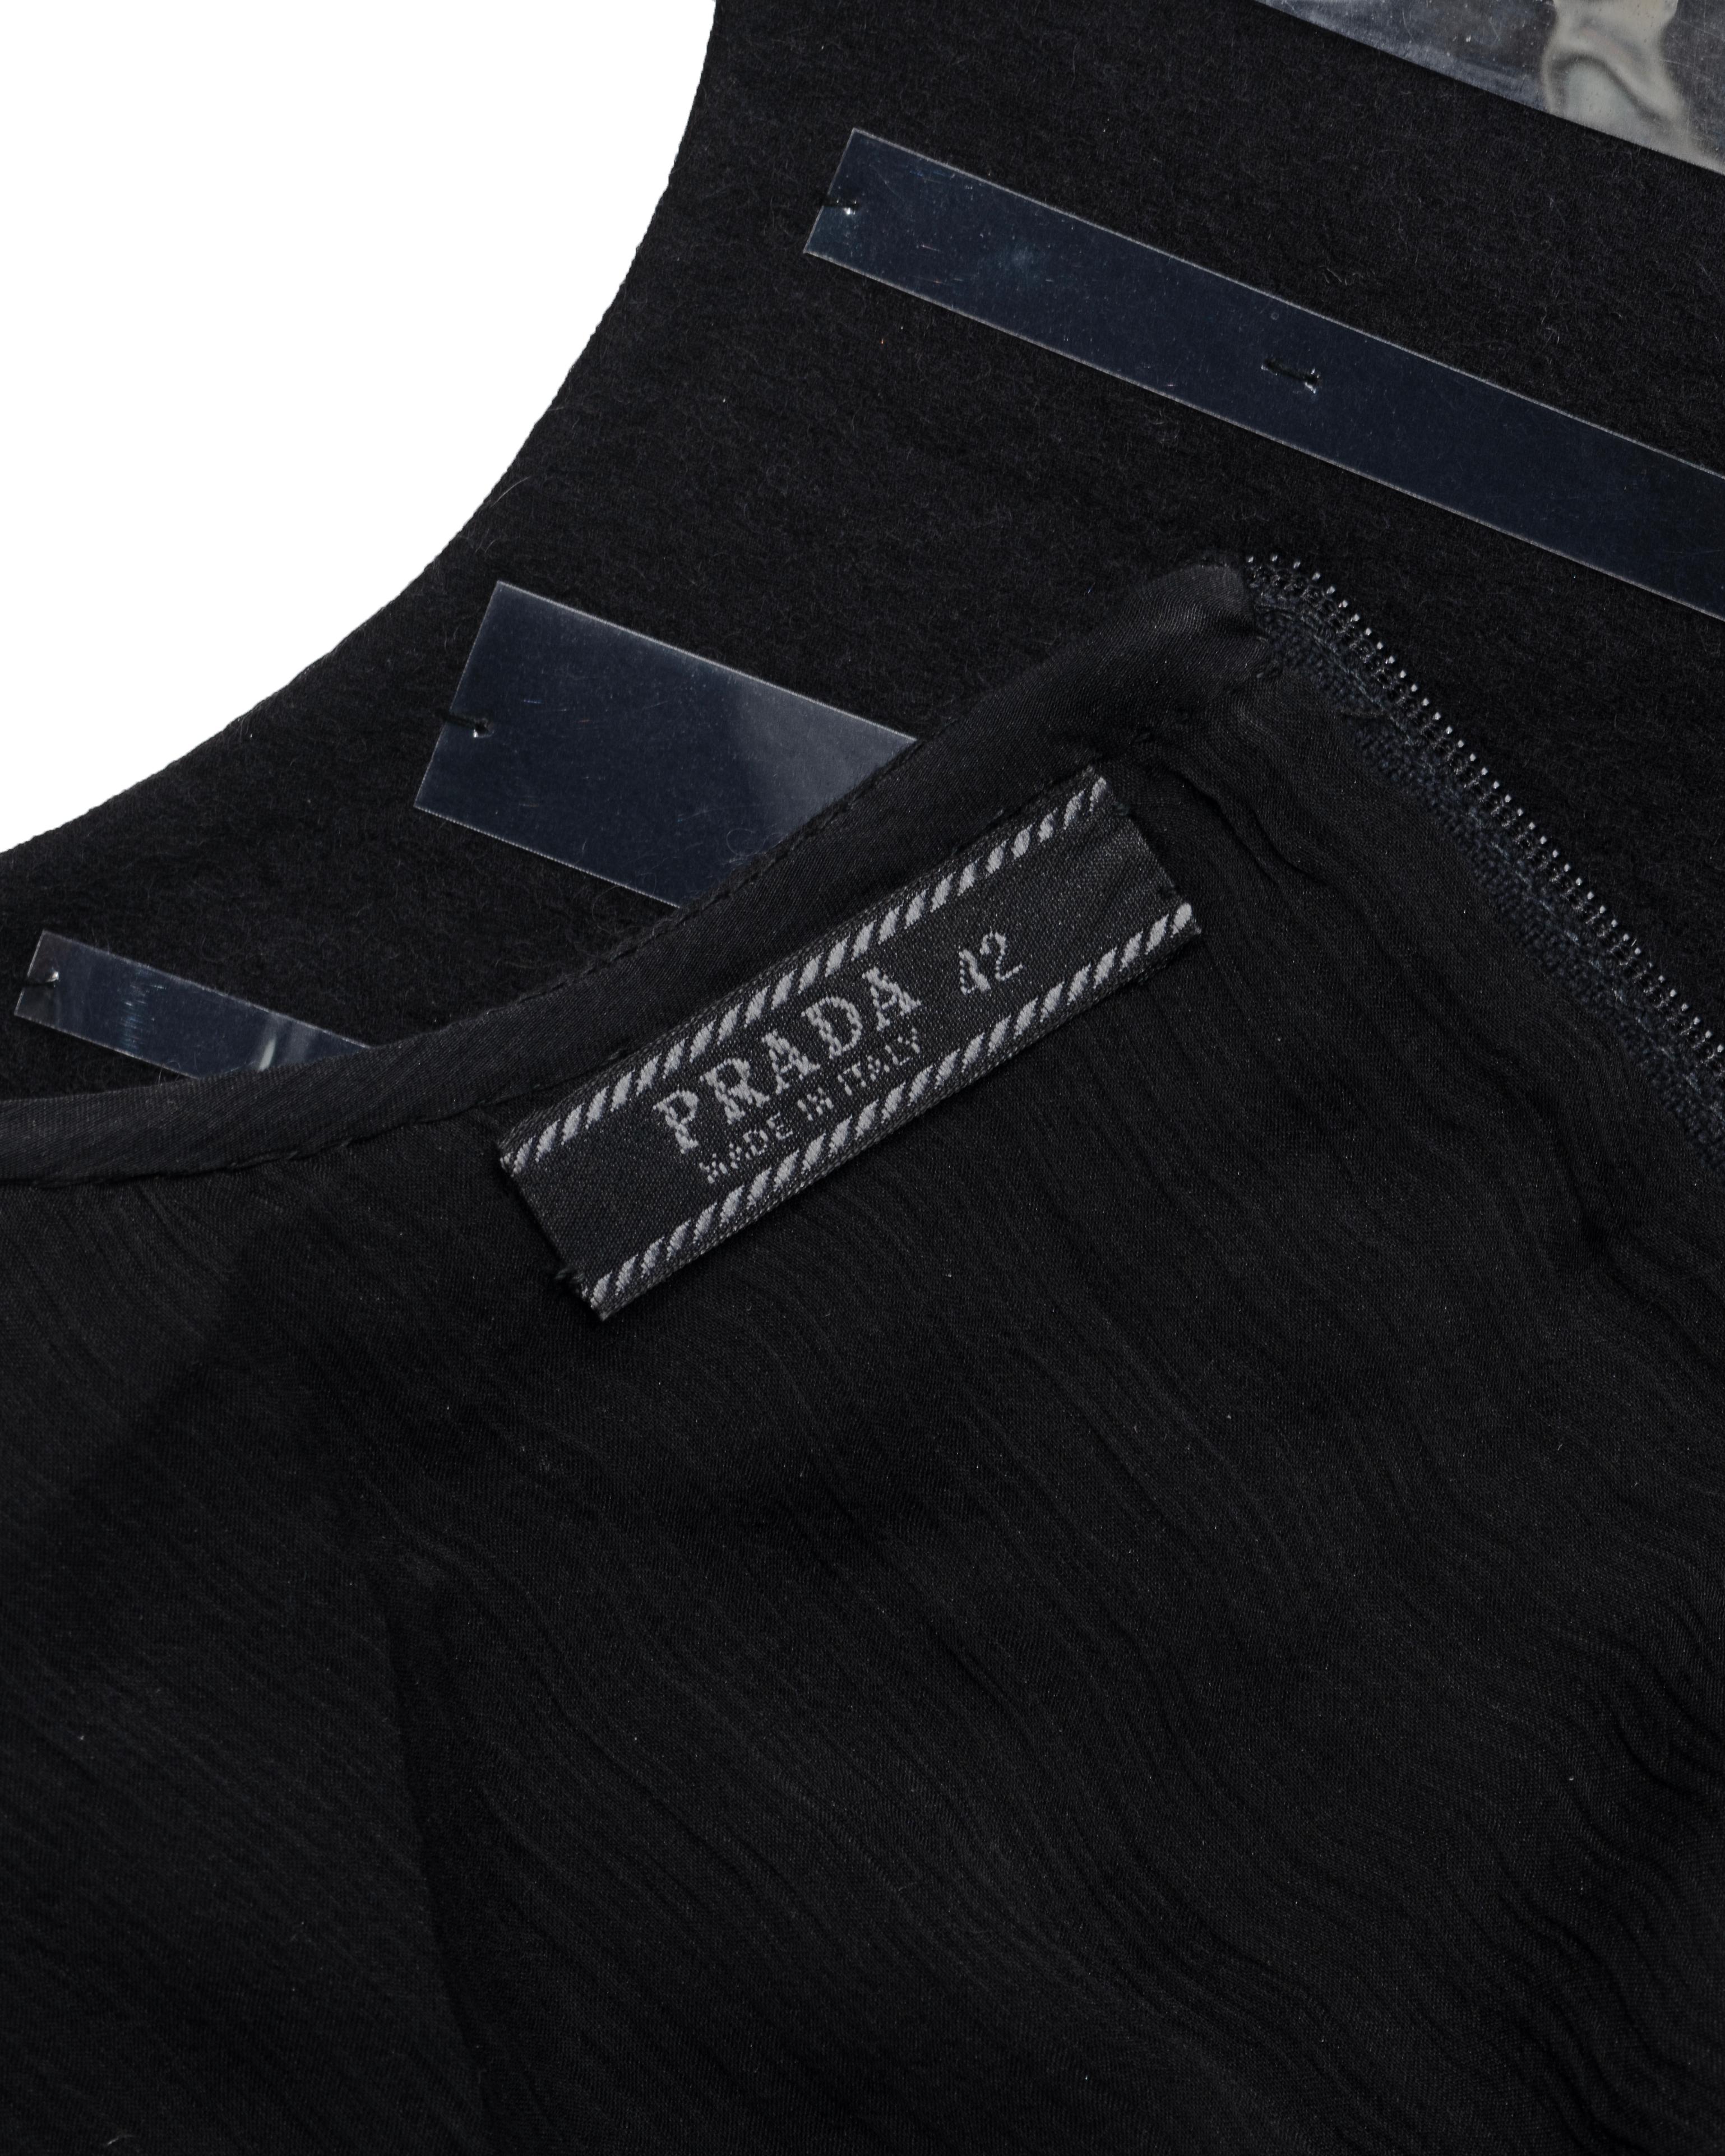 Prada by Miuccia Prada Black Boiled Wool Plastic Embellished Top, fw 1998 For Sale 7